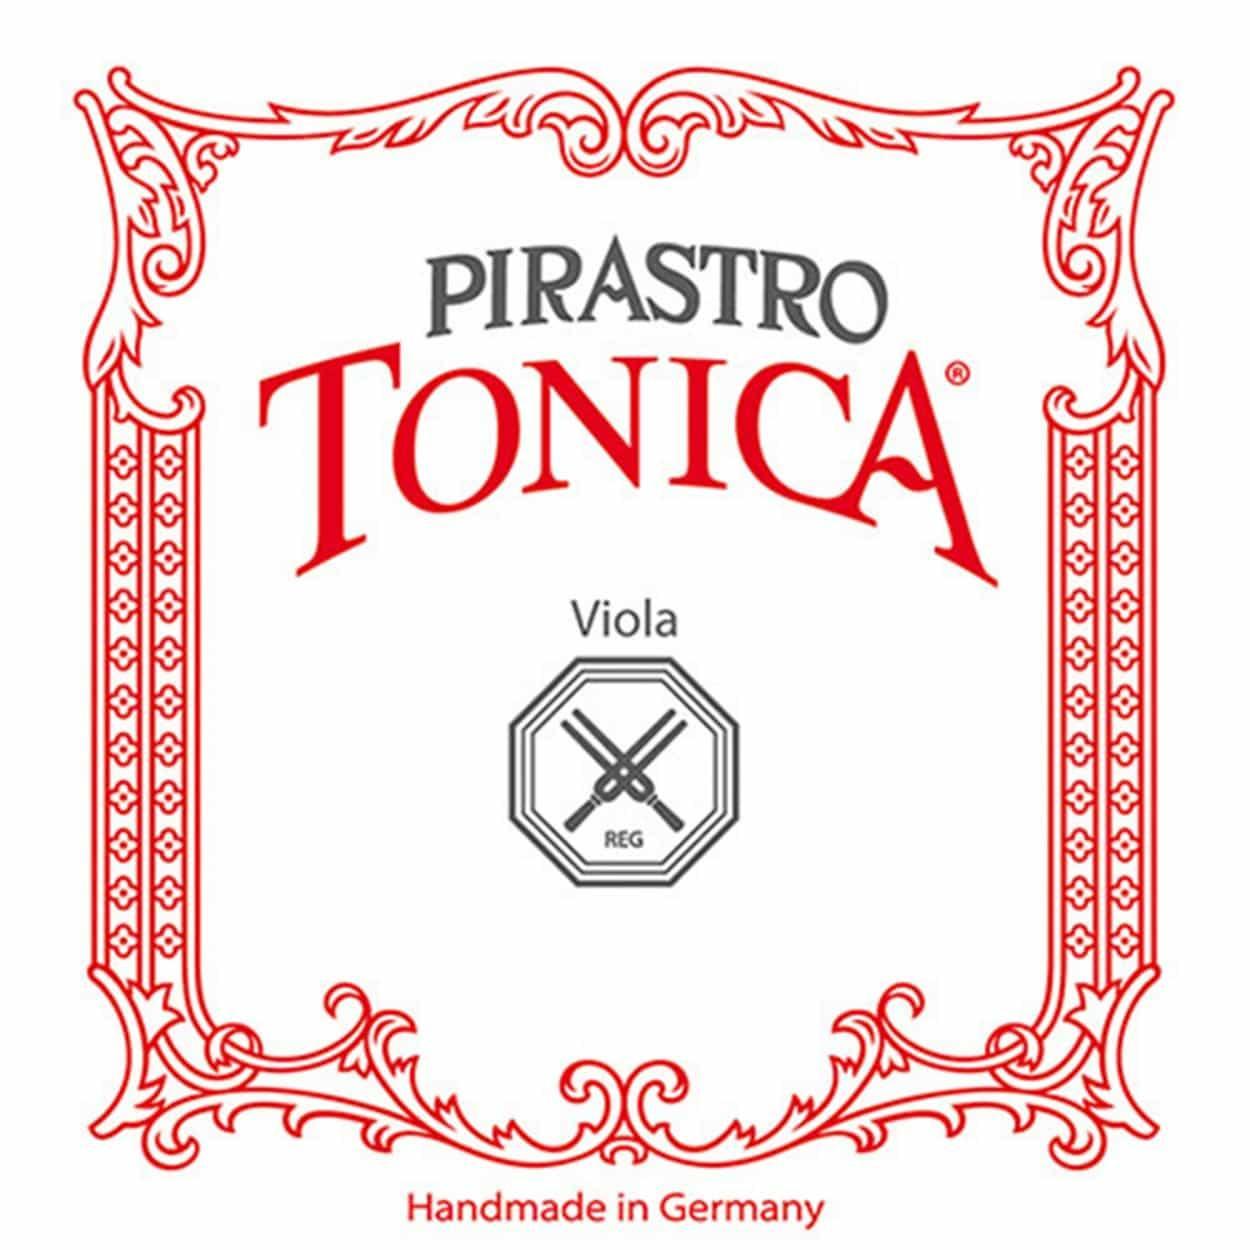 Pirastro Tonica Viola 4/4 Set - Orchestral - Strings - Accessories by Pirastro at Muso's Stuff